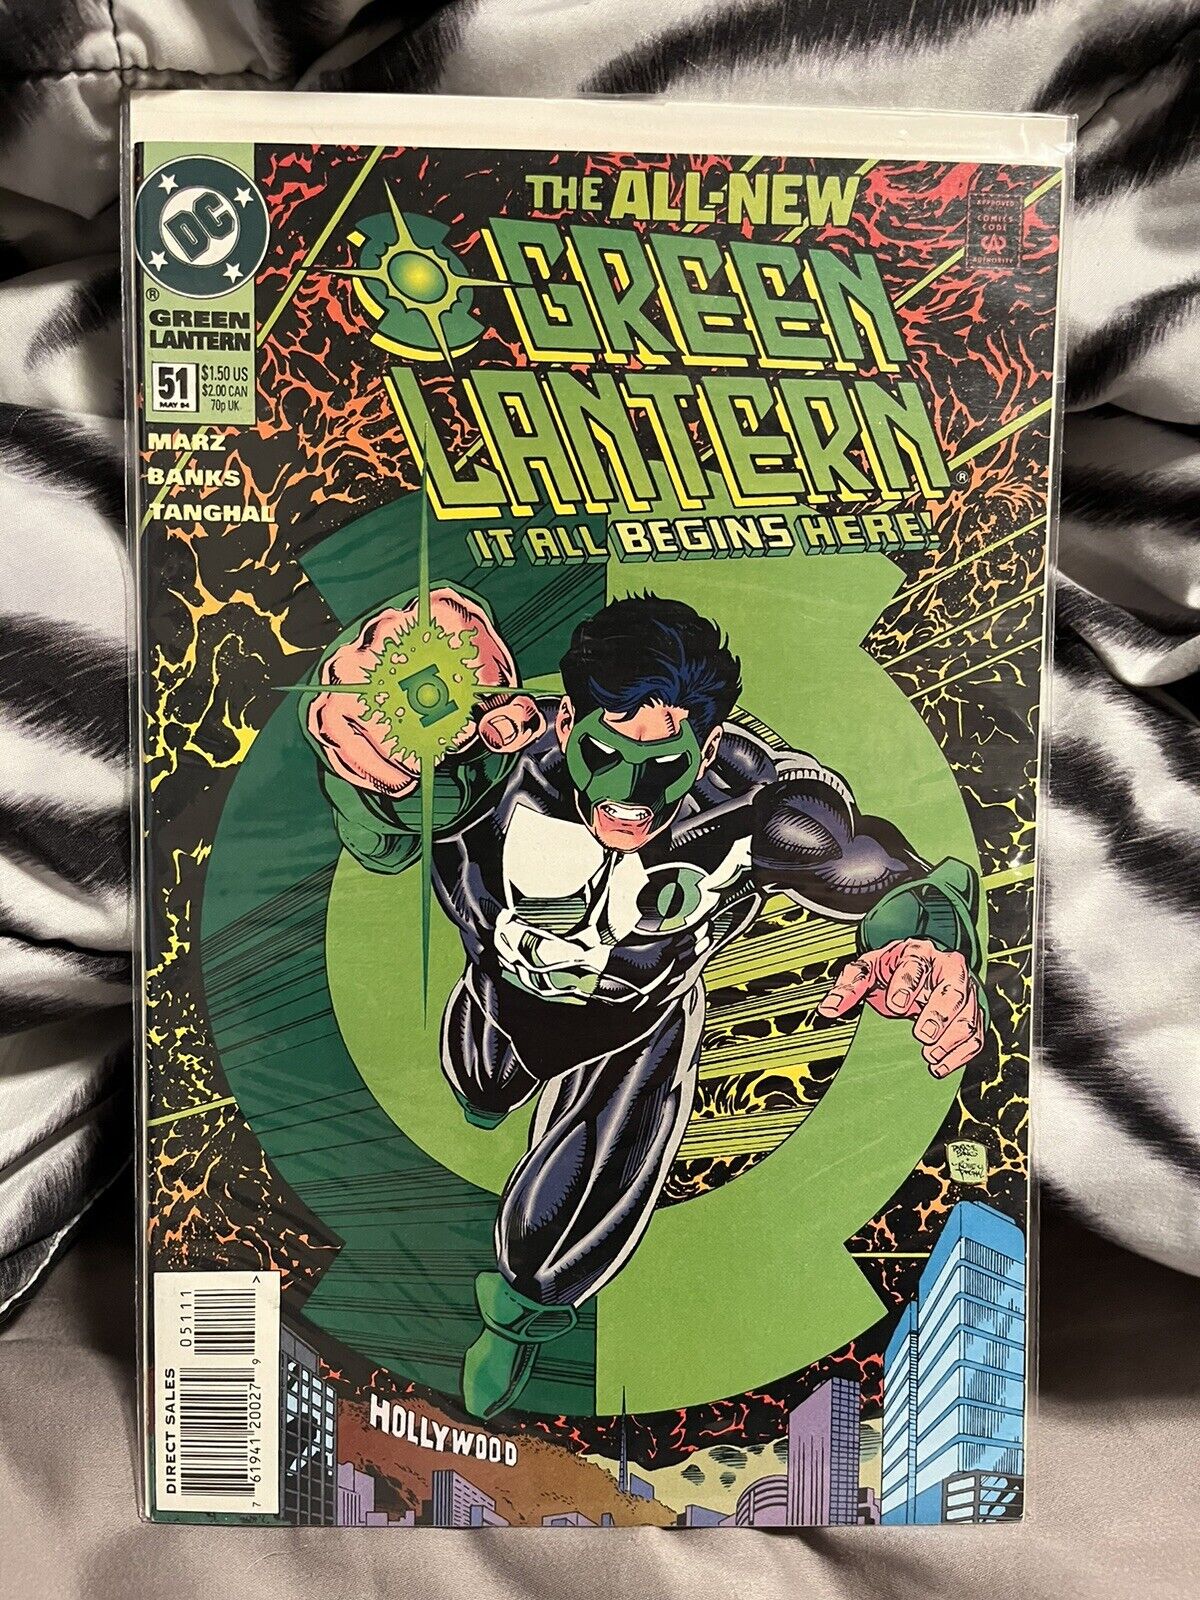 Green Lantern #51 (DC Comics May 1994)